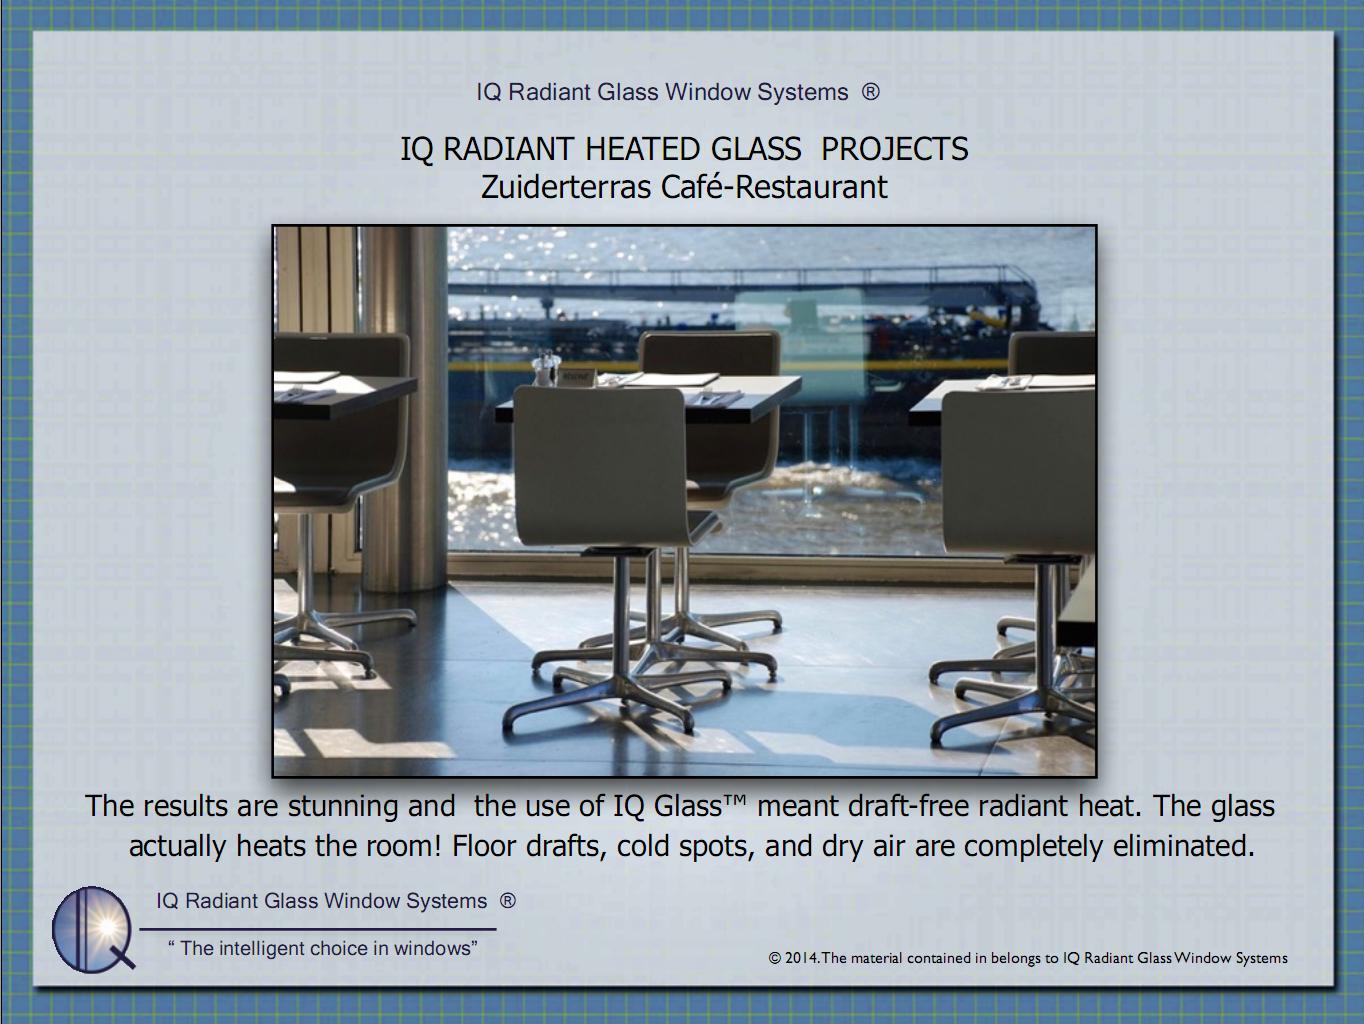 Zuidertrras_Cafe